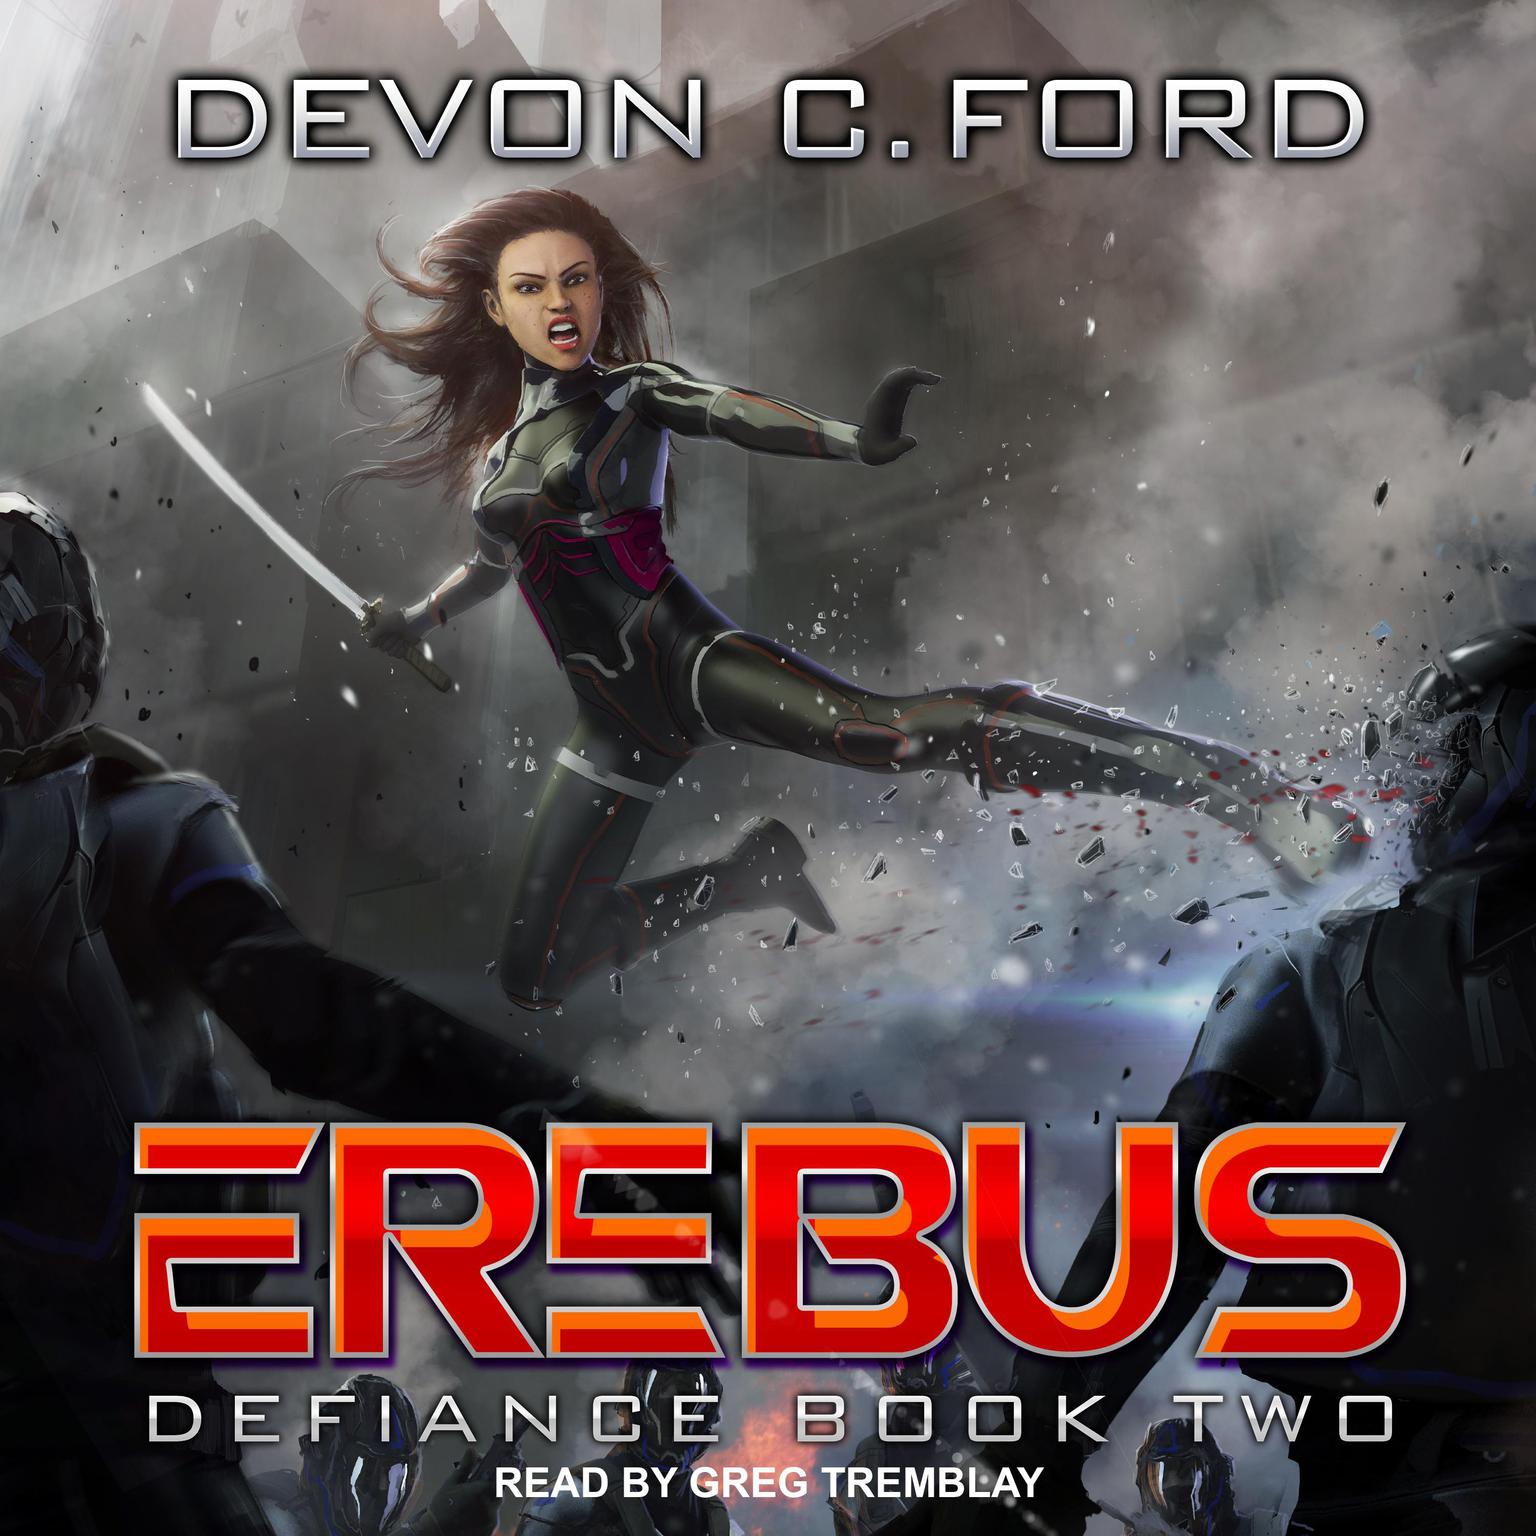 Erebus Audiobook, by Devon C. Ford